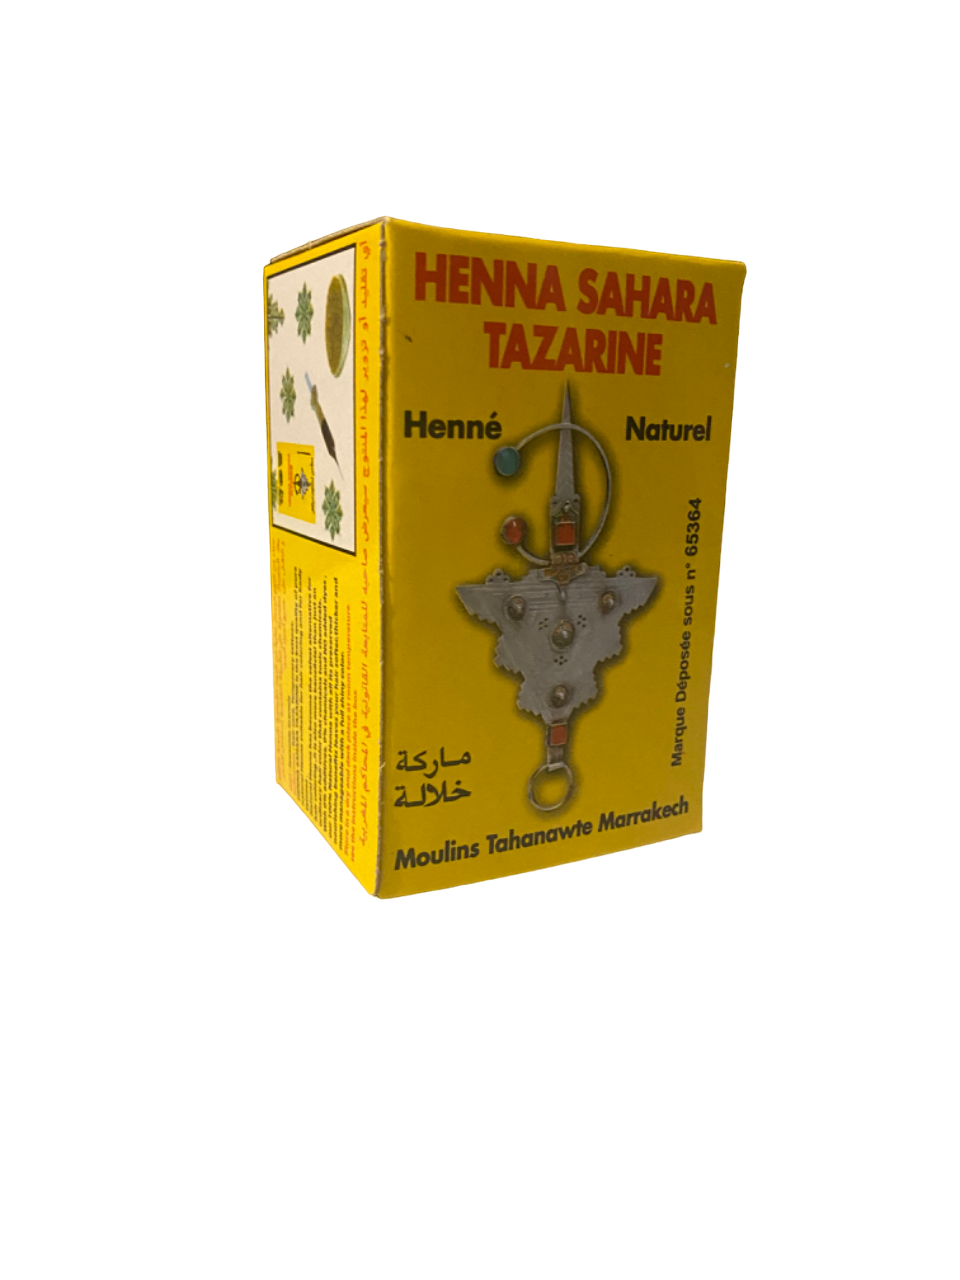 Henna sahara tazarine - henné naturel - حناء صحراء تزرين -